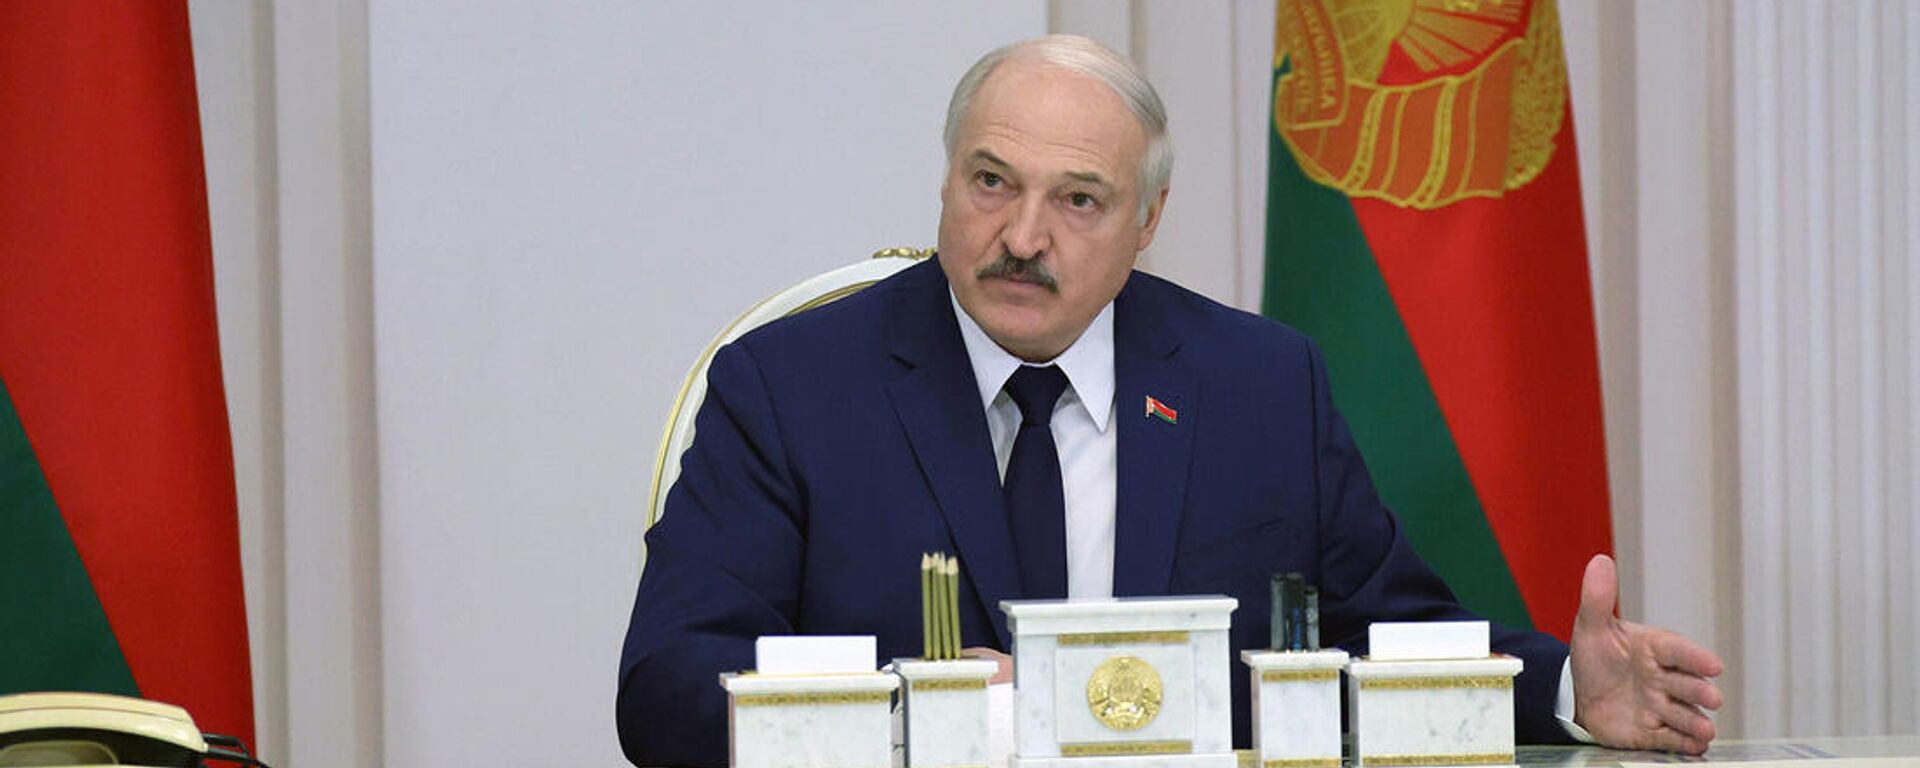 Baltarusijos prezidentas Aleksandras Lukašenka - Sputnik Lietuva, 1920, 19.11.2021